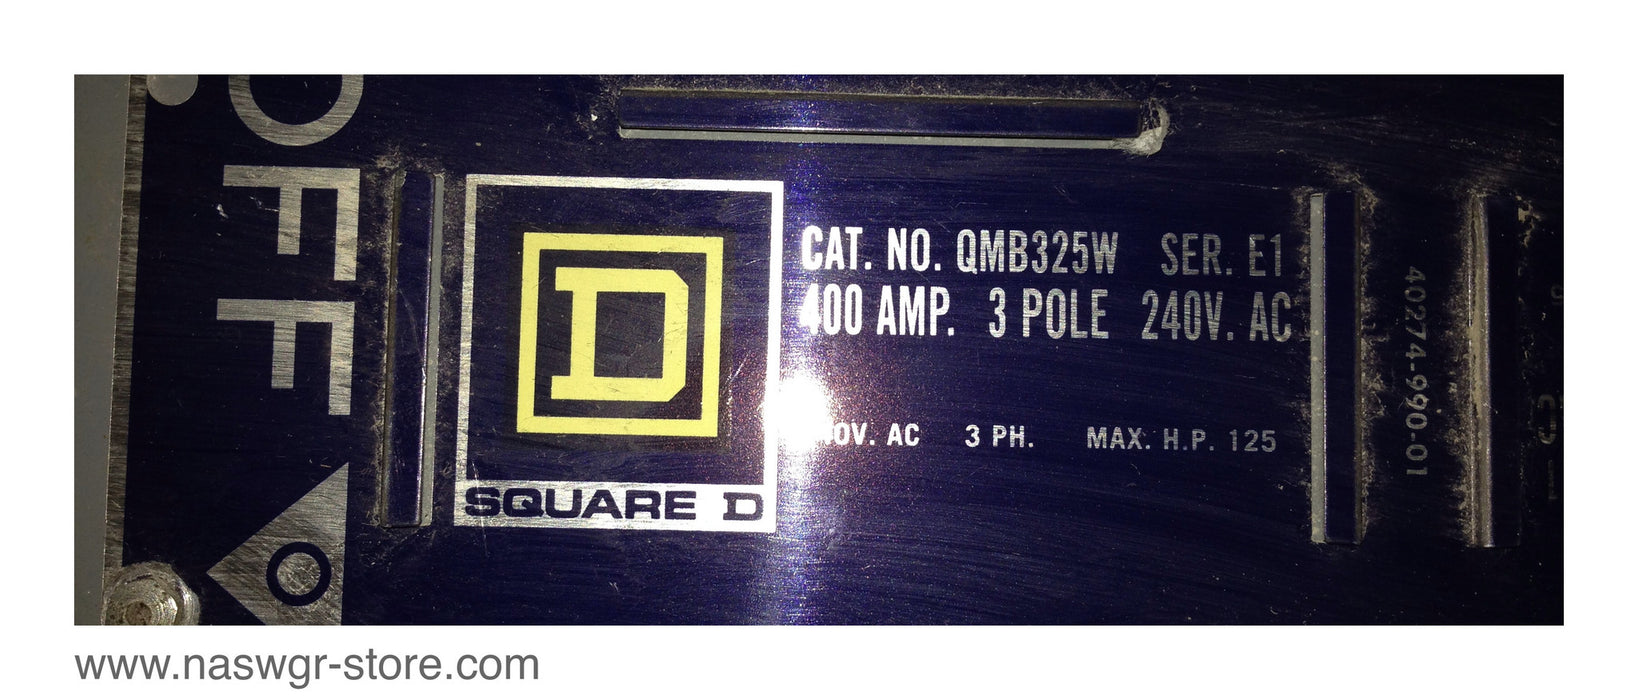 QMB325W - Square D QMB325W Panel Board Switch - 400 Amps